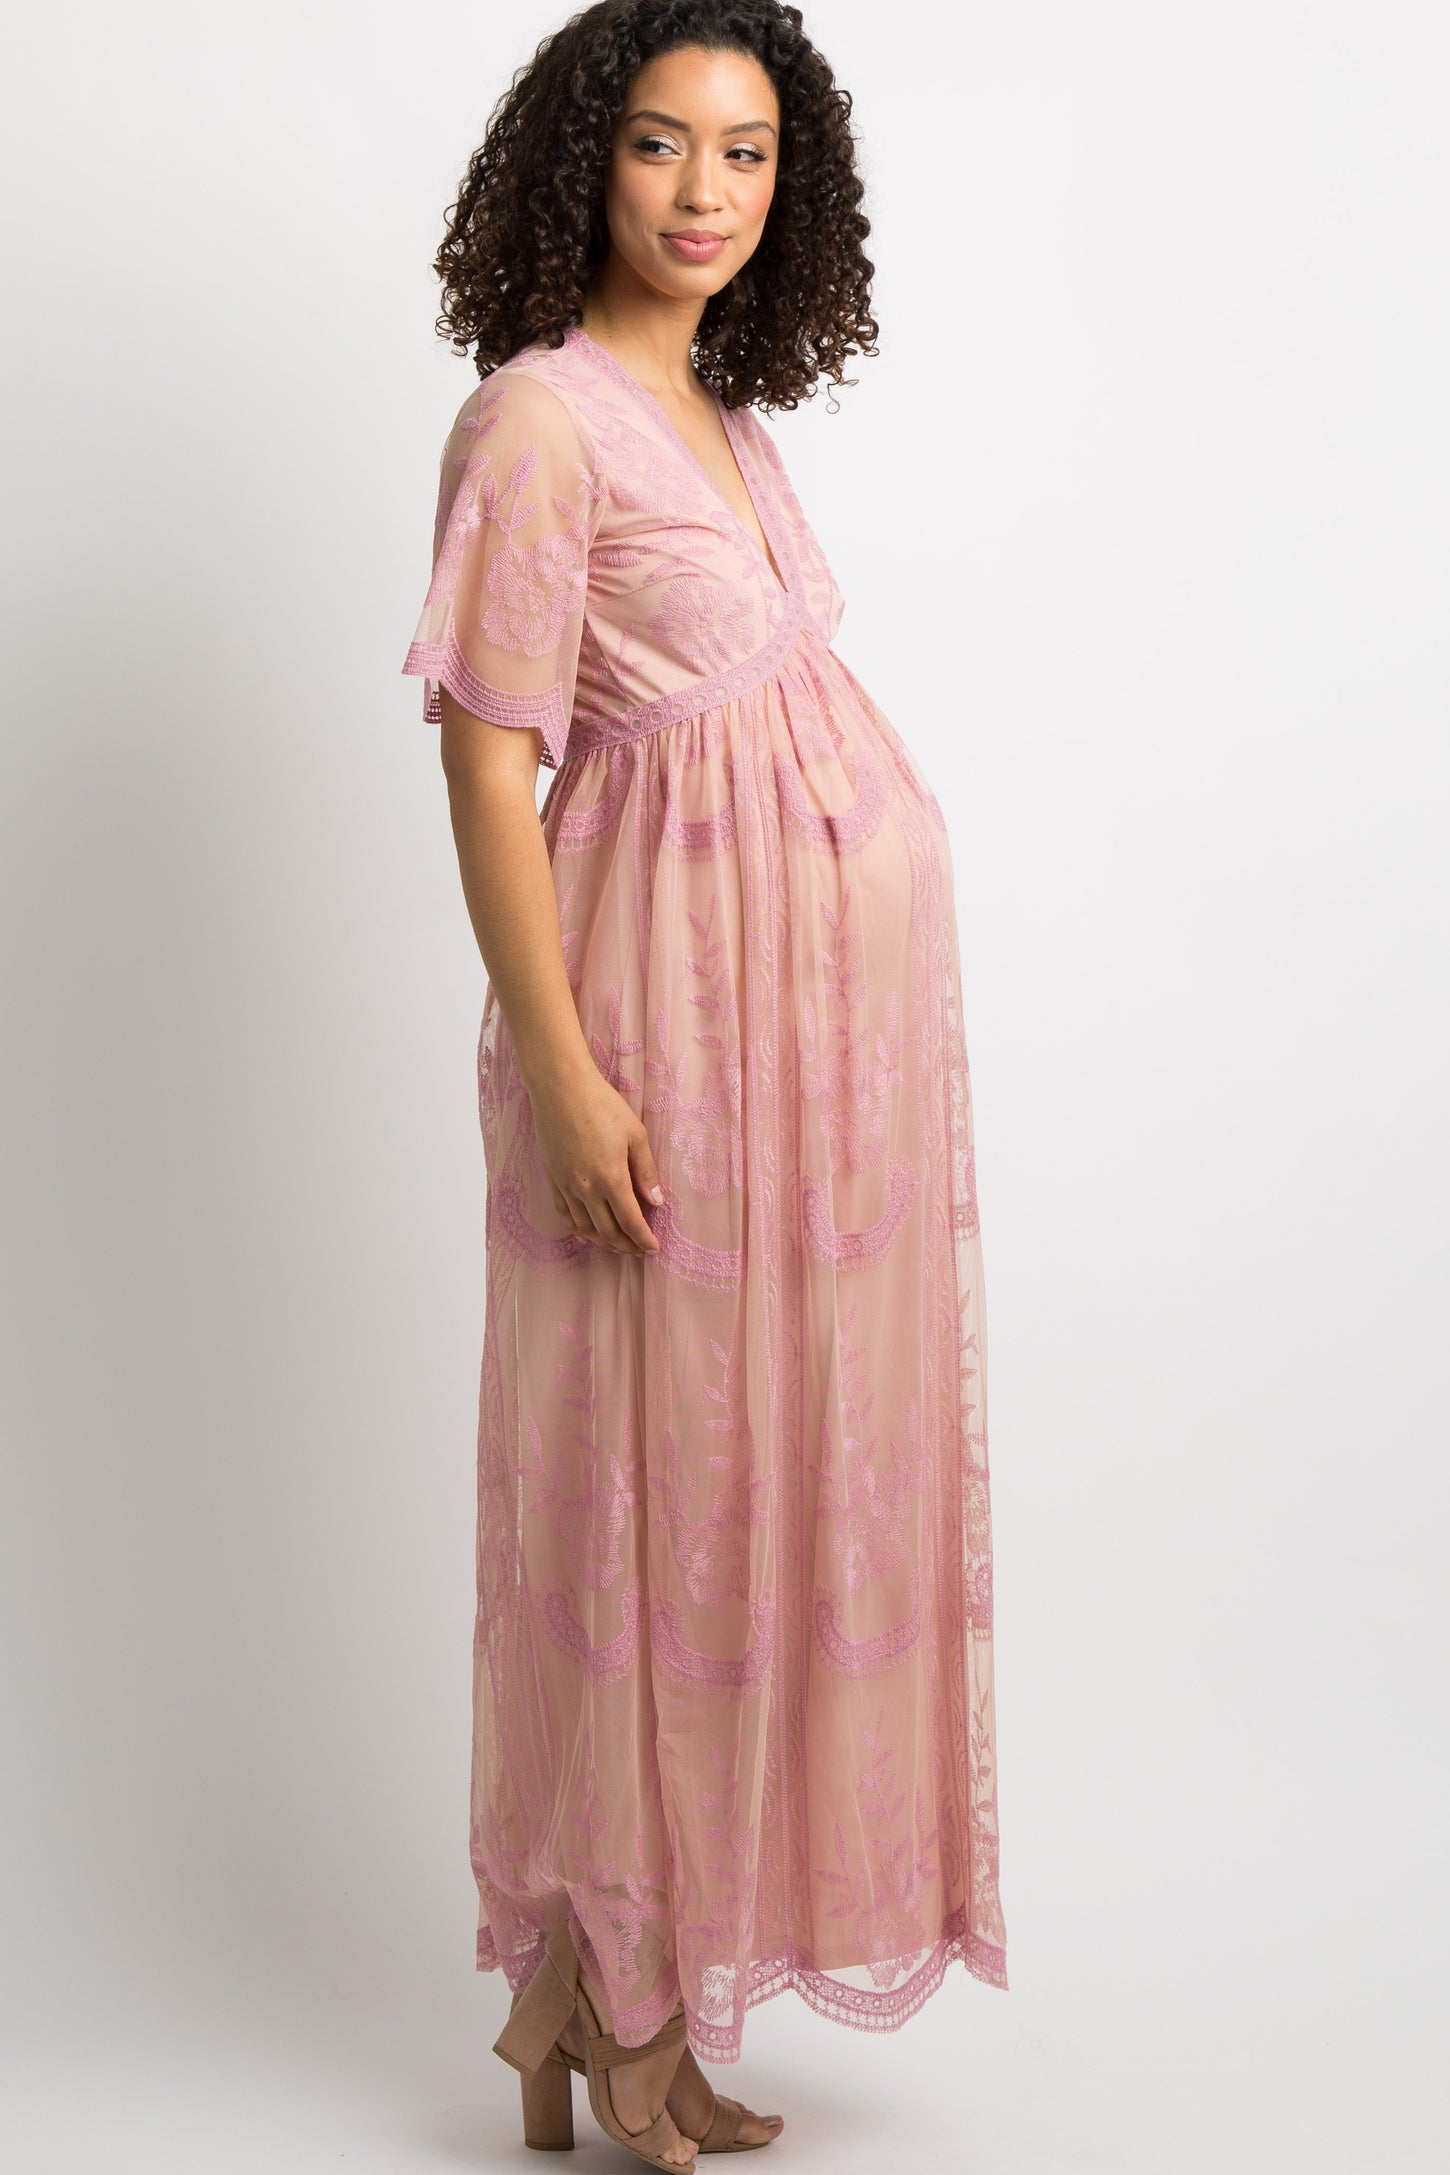 Pink Lace Mesh Overlay Maternity Maxi Dress